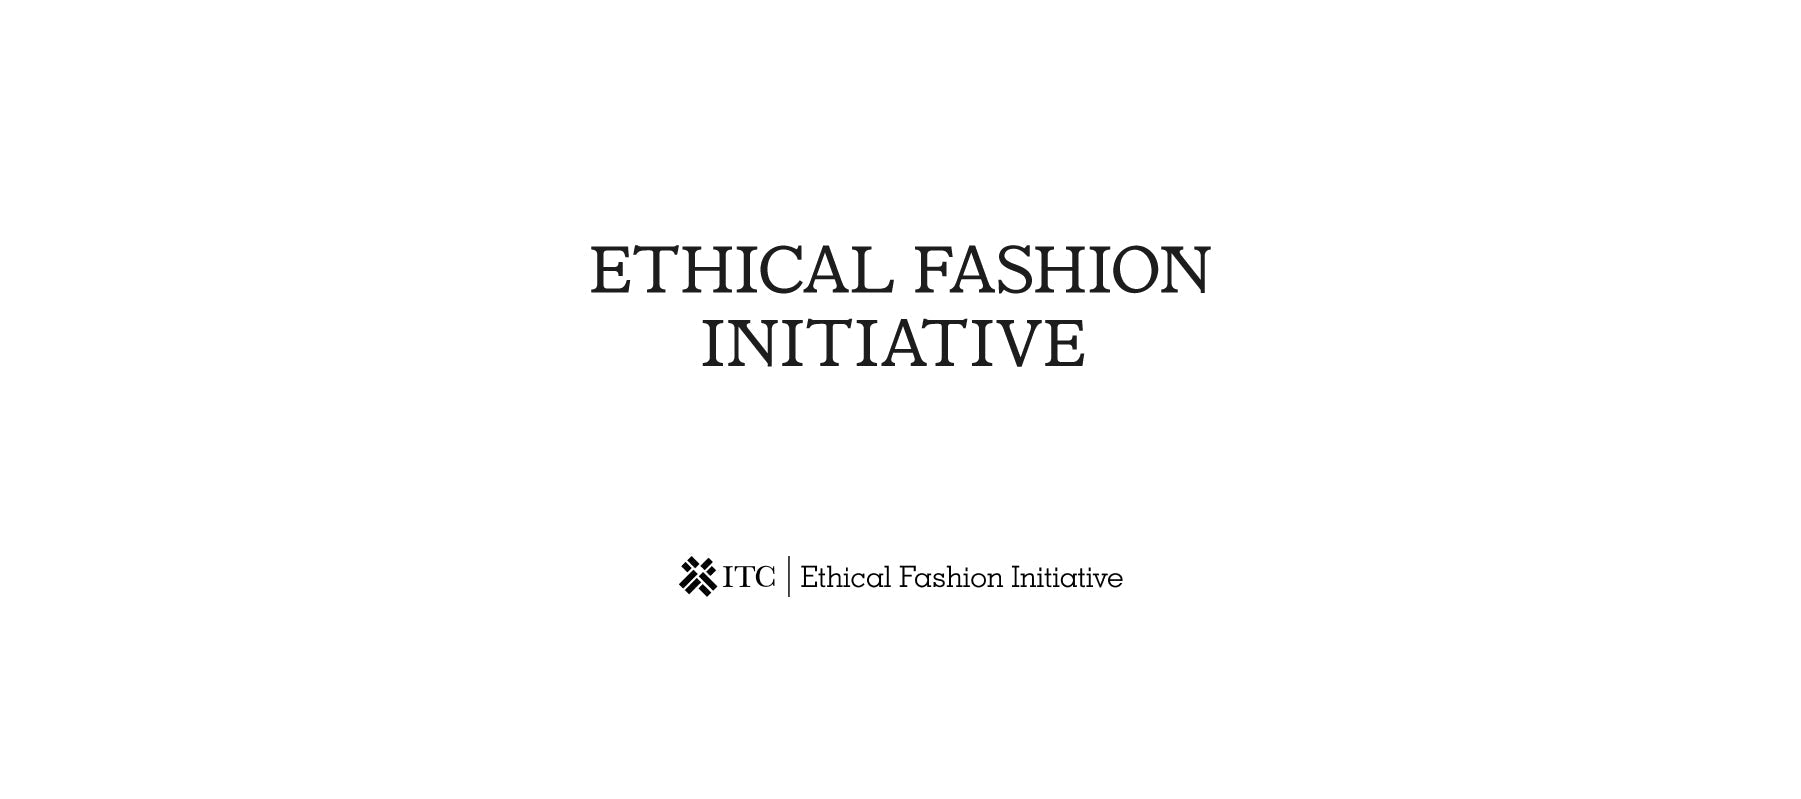 EFI ethical fashion initiative